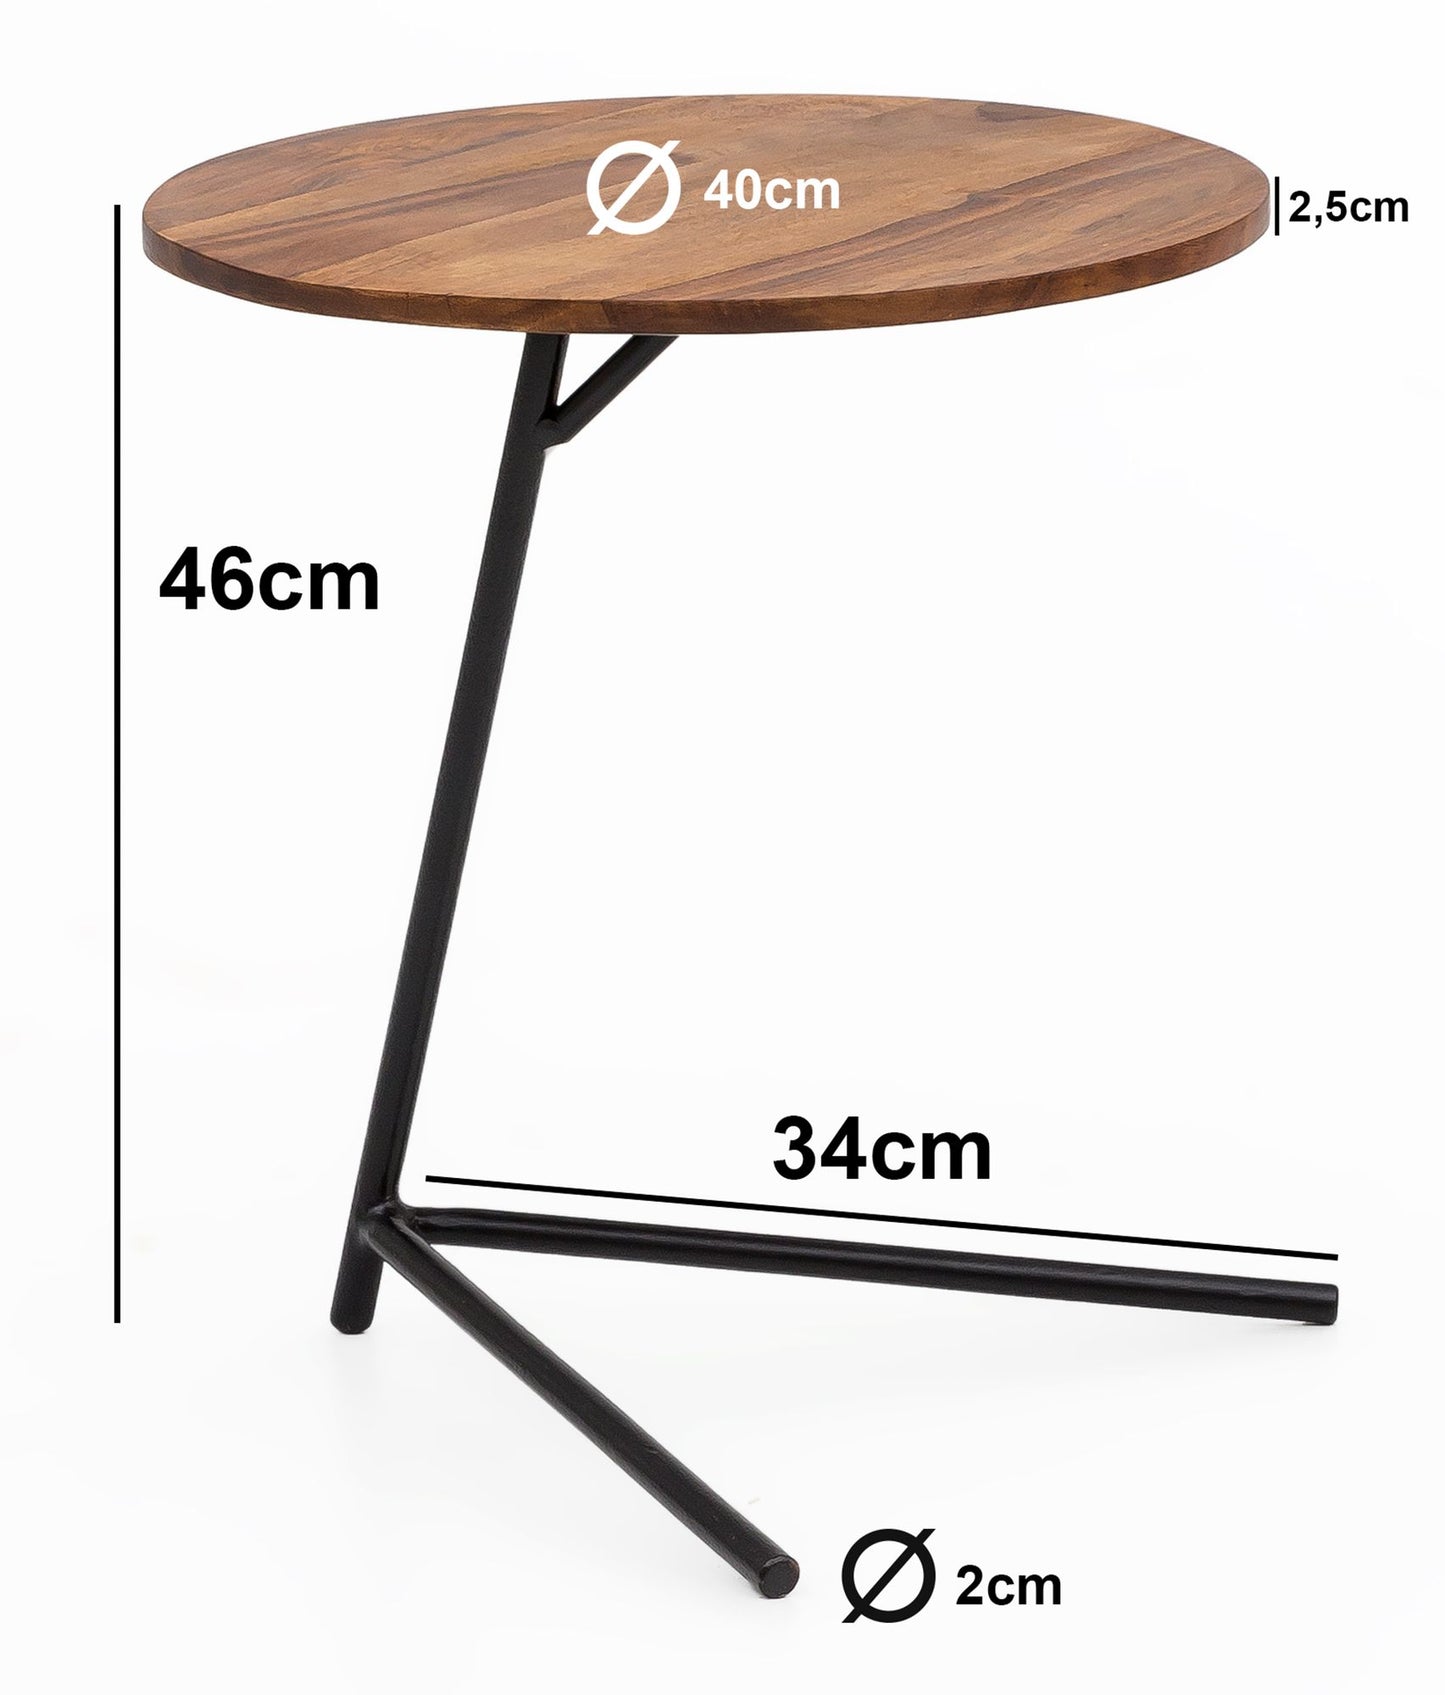 Table d'appoint de Nancy - Table basse en bois - Marron - 40 x 46 x 40 cm